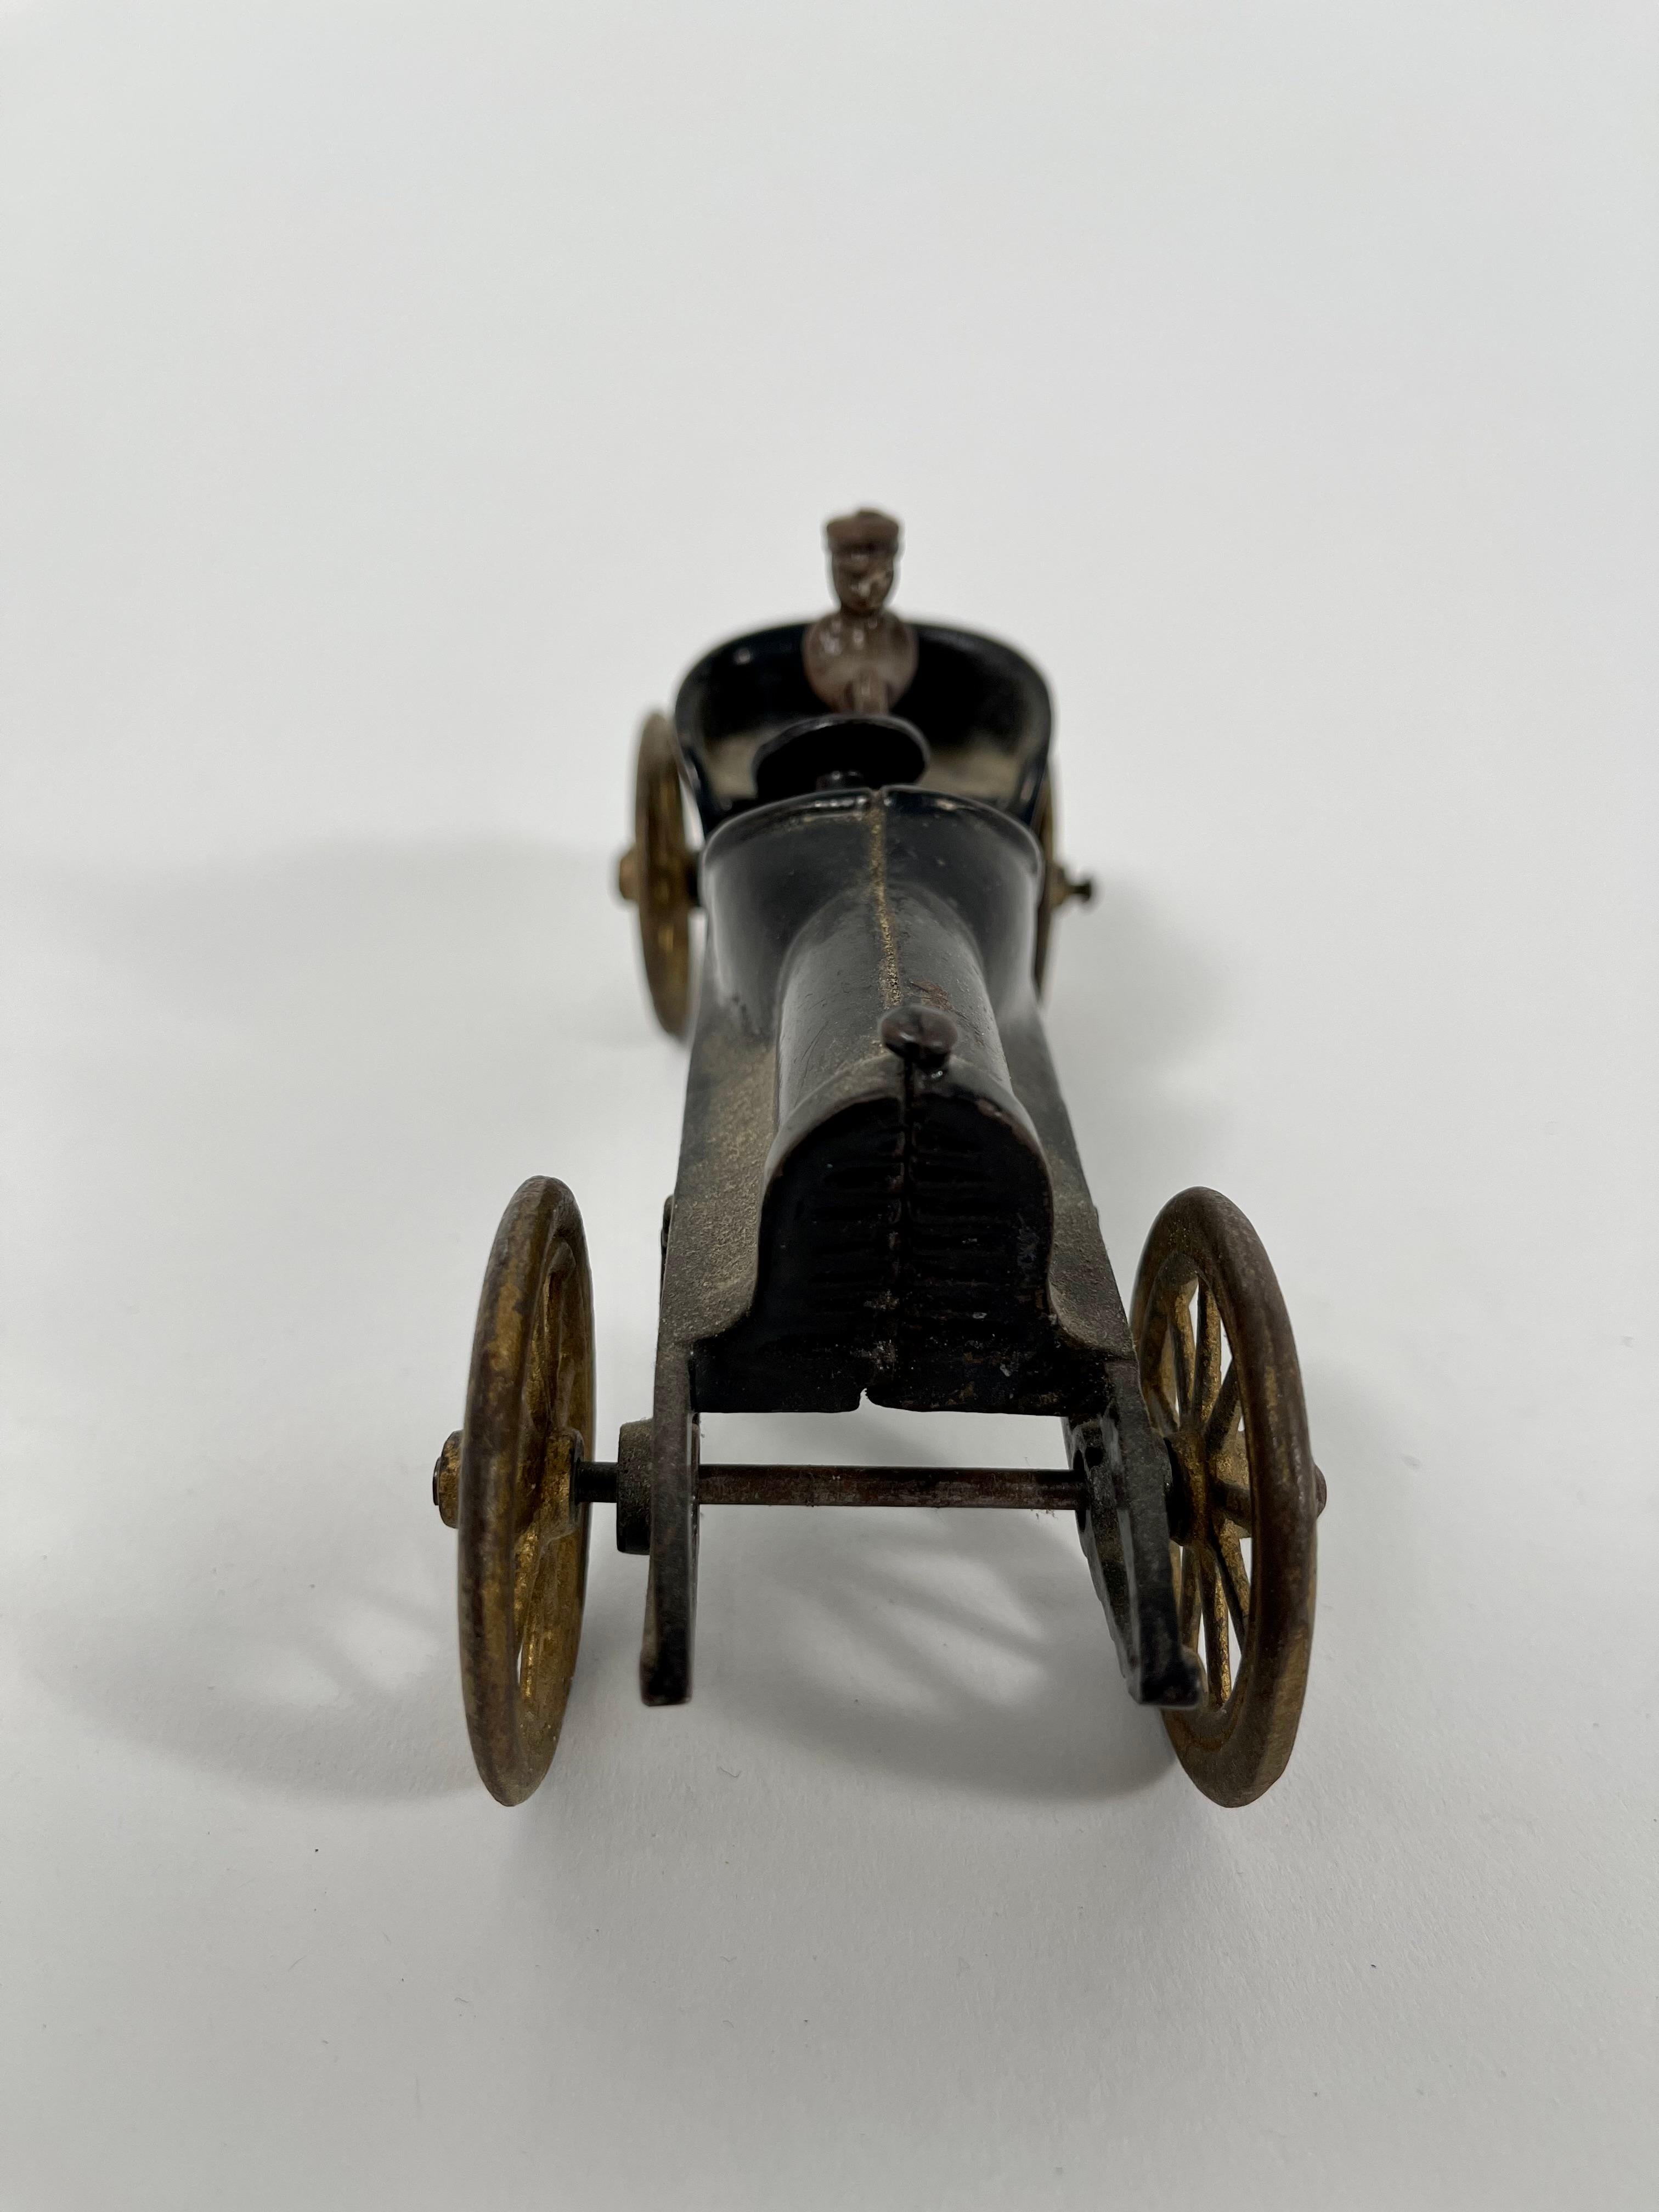 American Antique Toy Race Car, circa 1920s